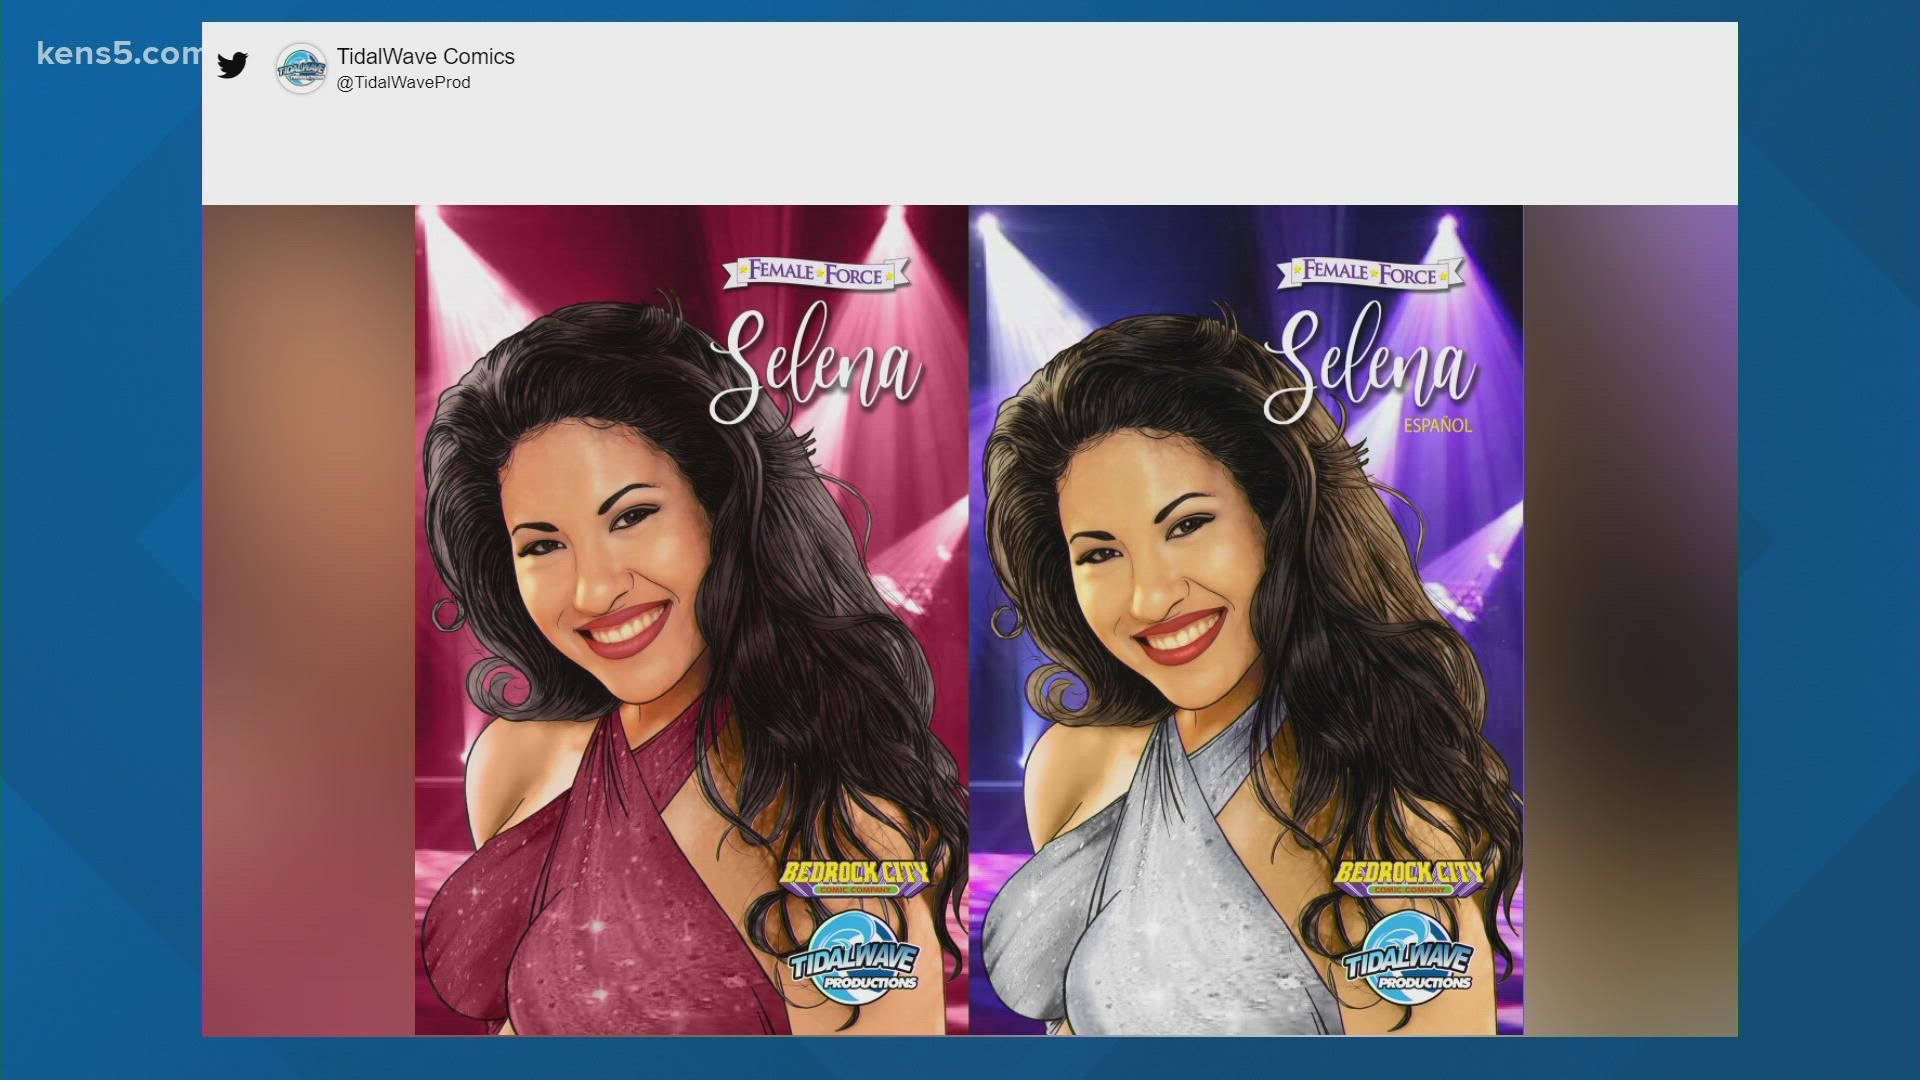 TidalWave Comics released a new variant of the two Selena Quintanilla comic books for Texas retailer Bedrock City Comics.